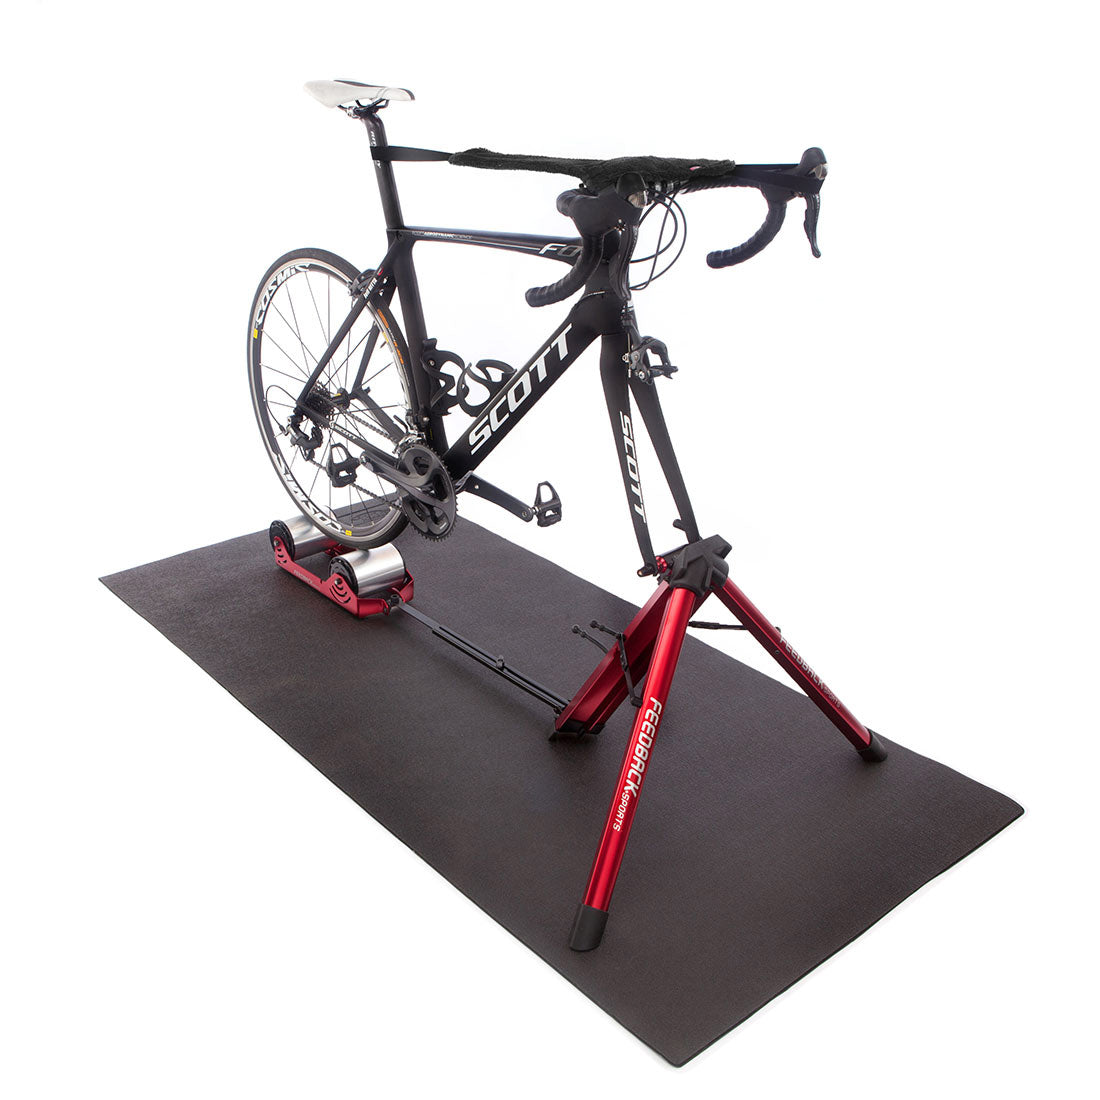 Feedback Sports Omnium bike trainer on trainer mat in studio with black bike installed.